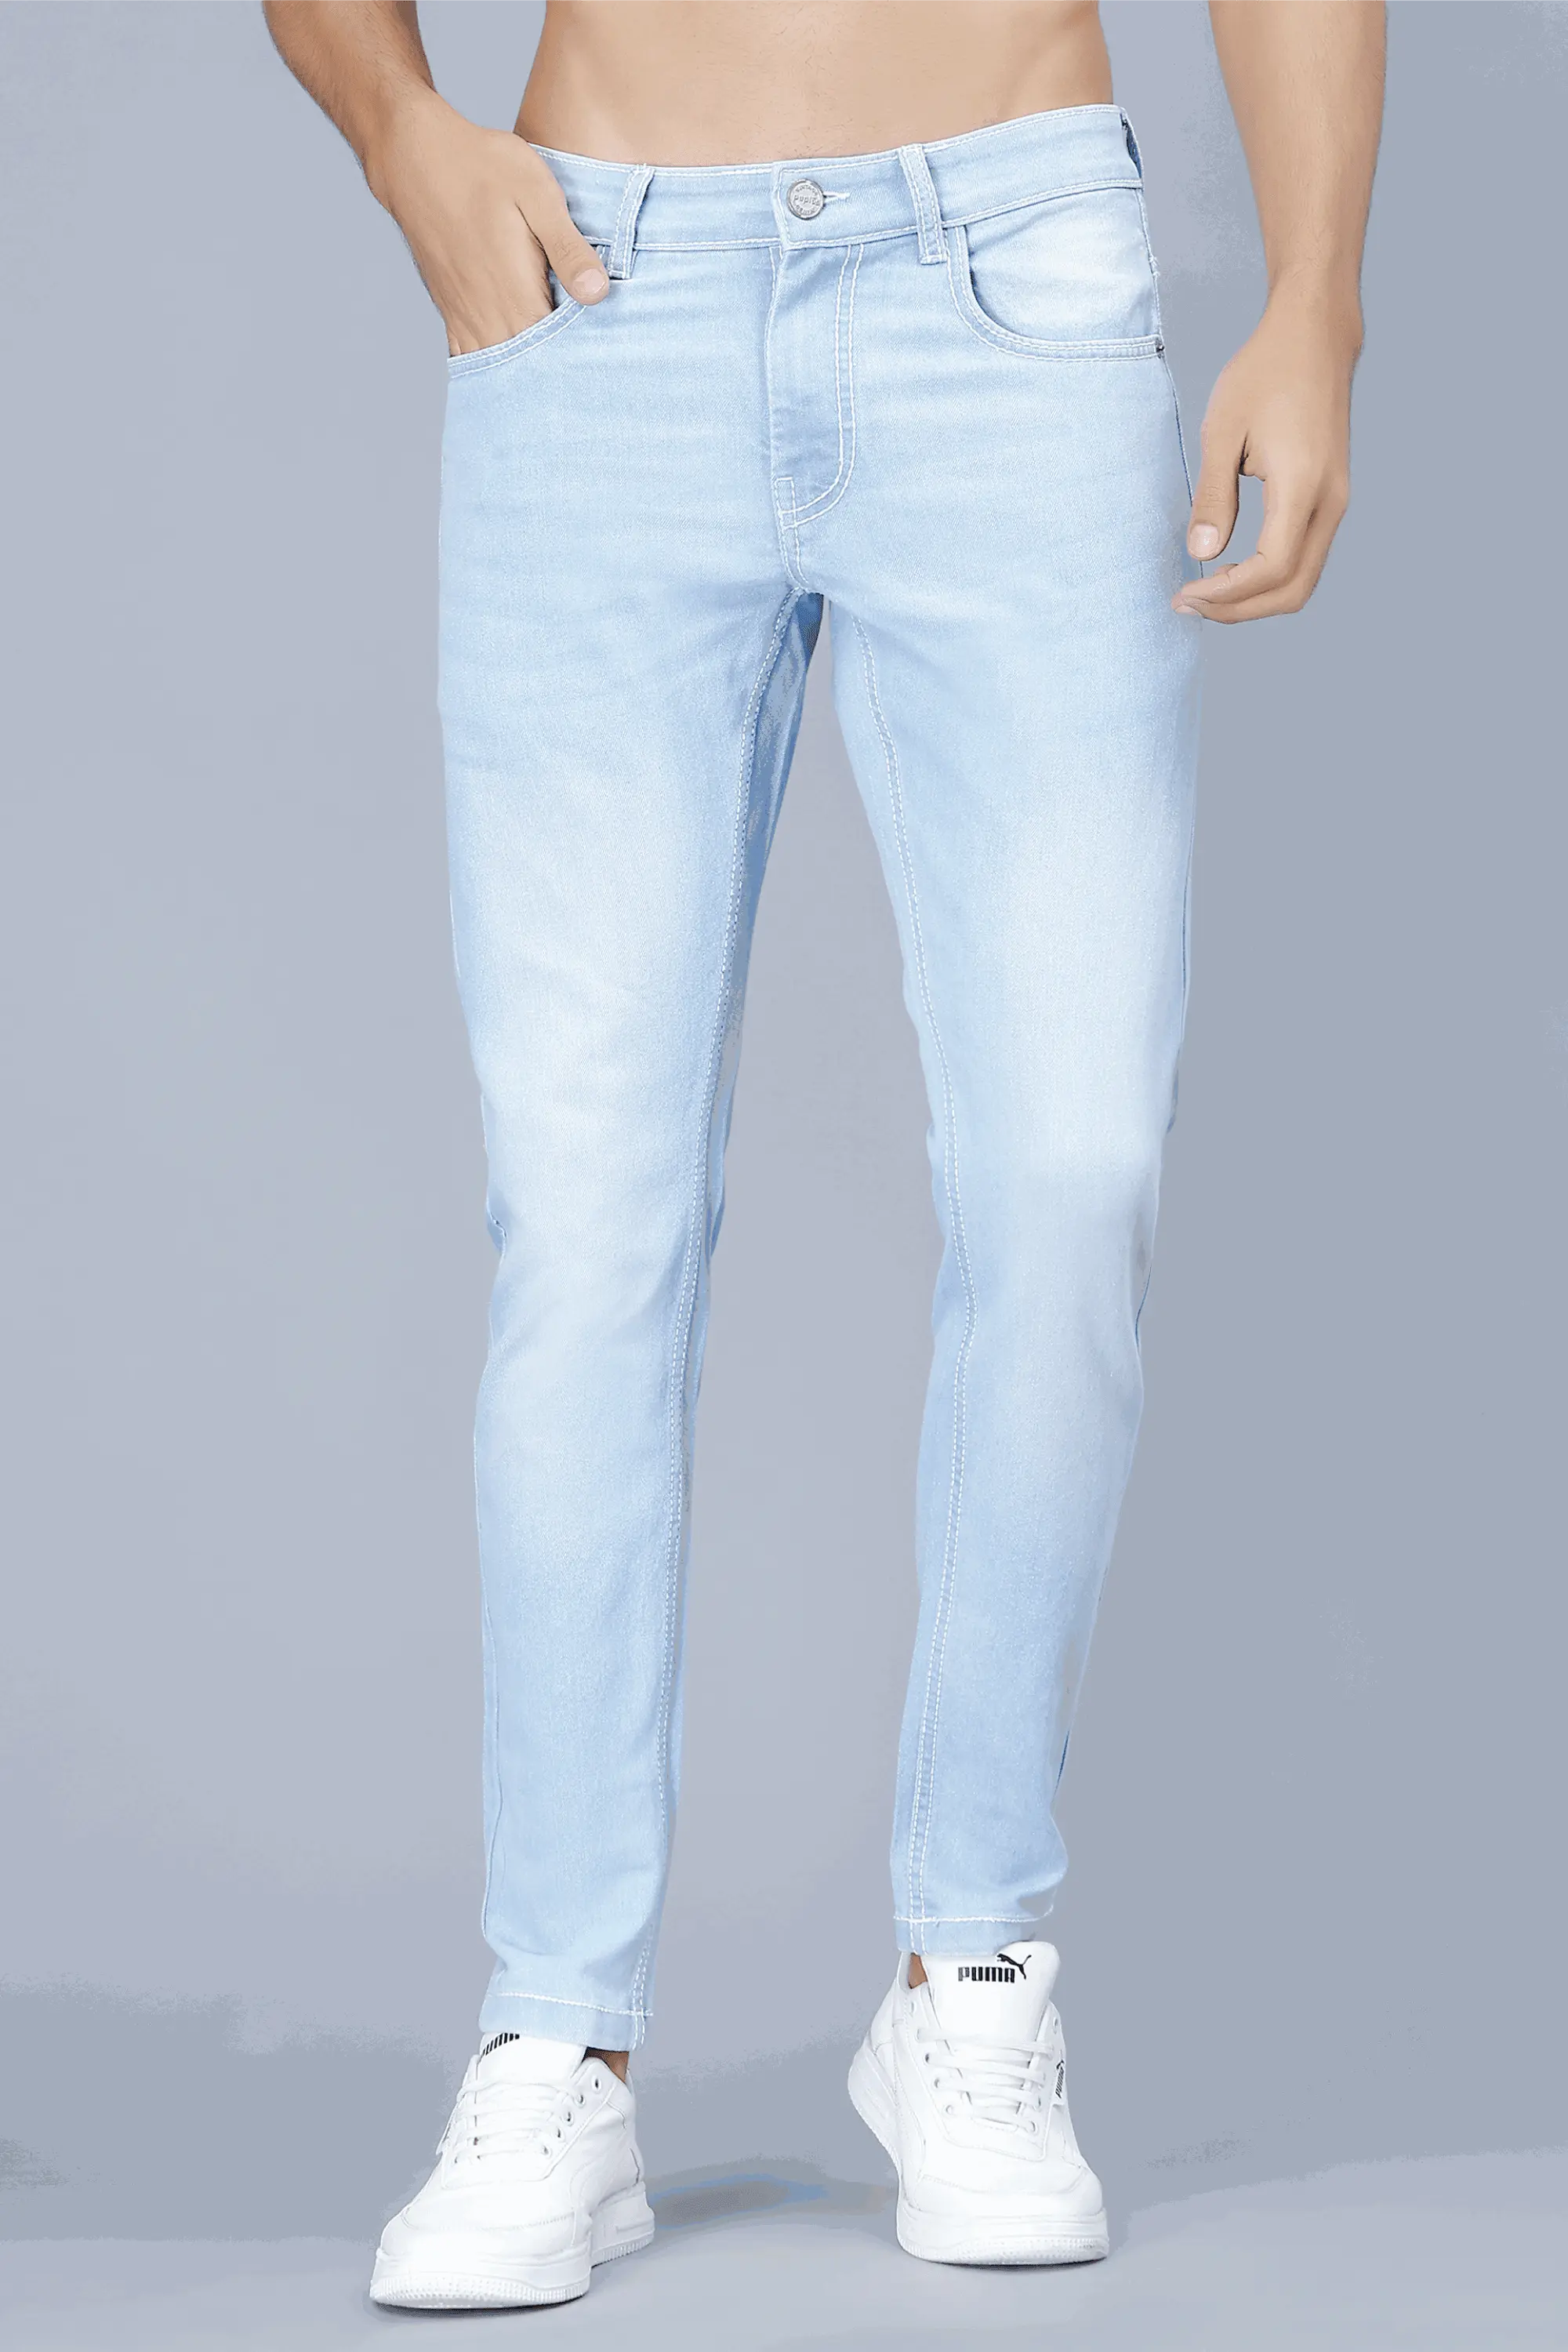 Buy J Brand Light Blue Denim Jeans Online - 529540 | The Collective